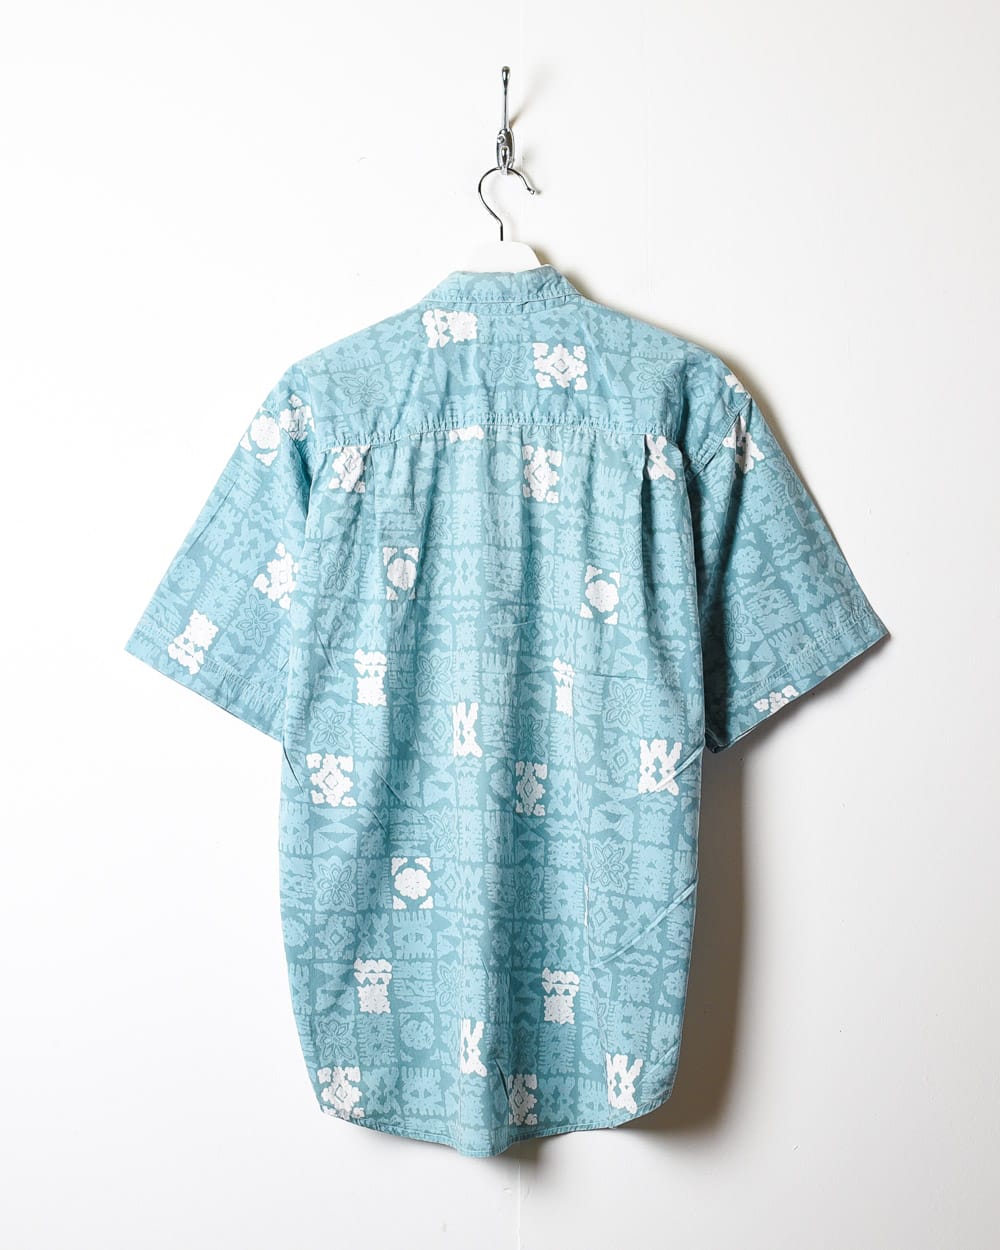 BabyBlue Patterned All-Over Print Short Sleeved Shirt - Large